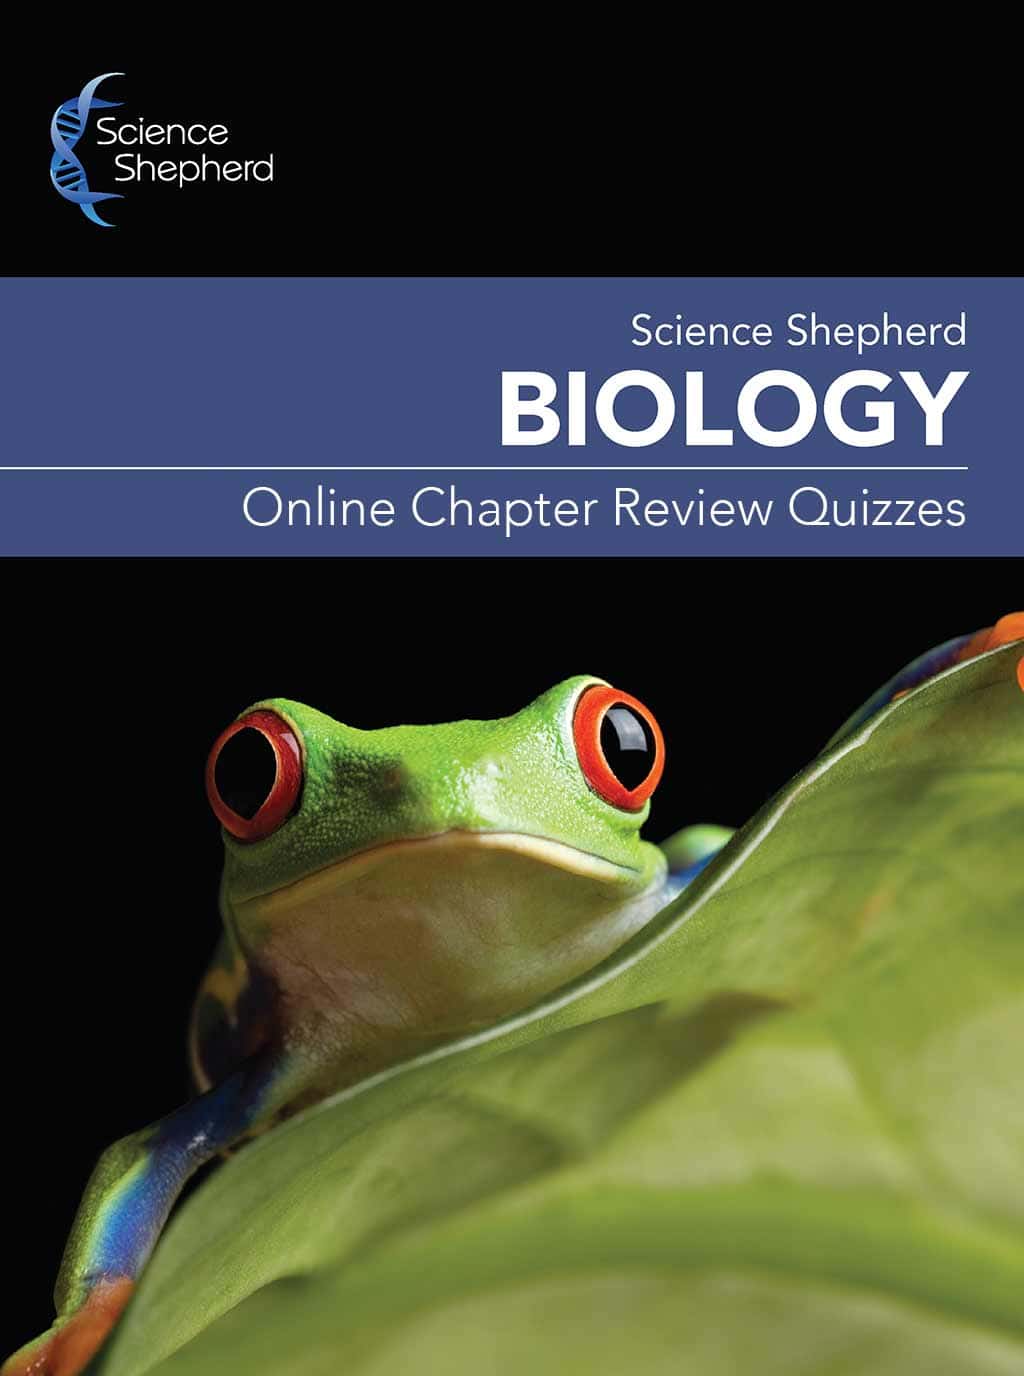 Science Shepherd homeschool high school Biology curriculum online chapter review quizzes cover